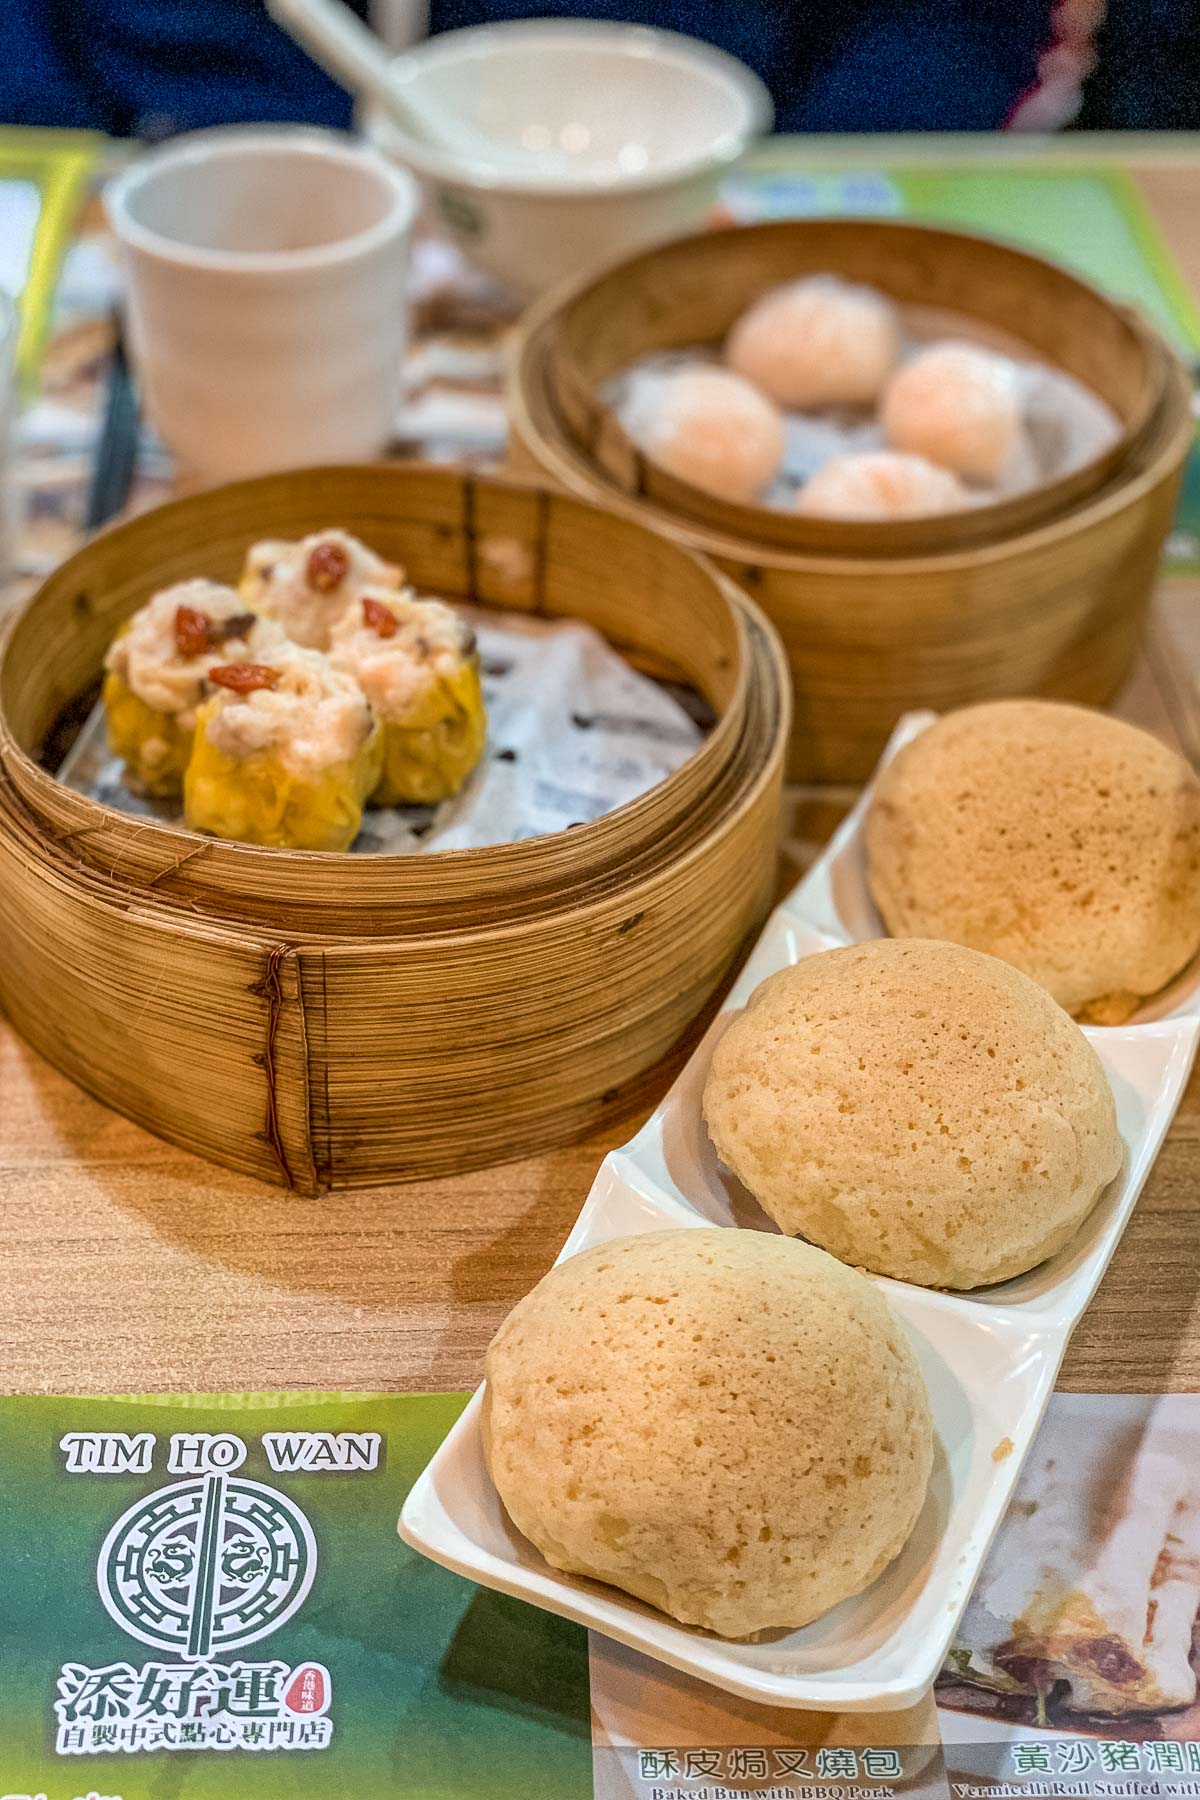 Dumplings at Tim Ho Wan in Hong Kong